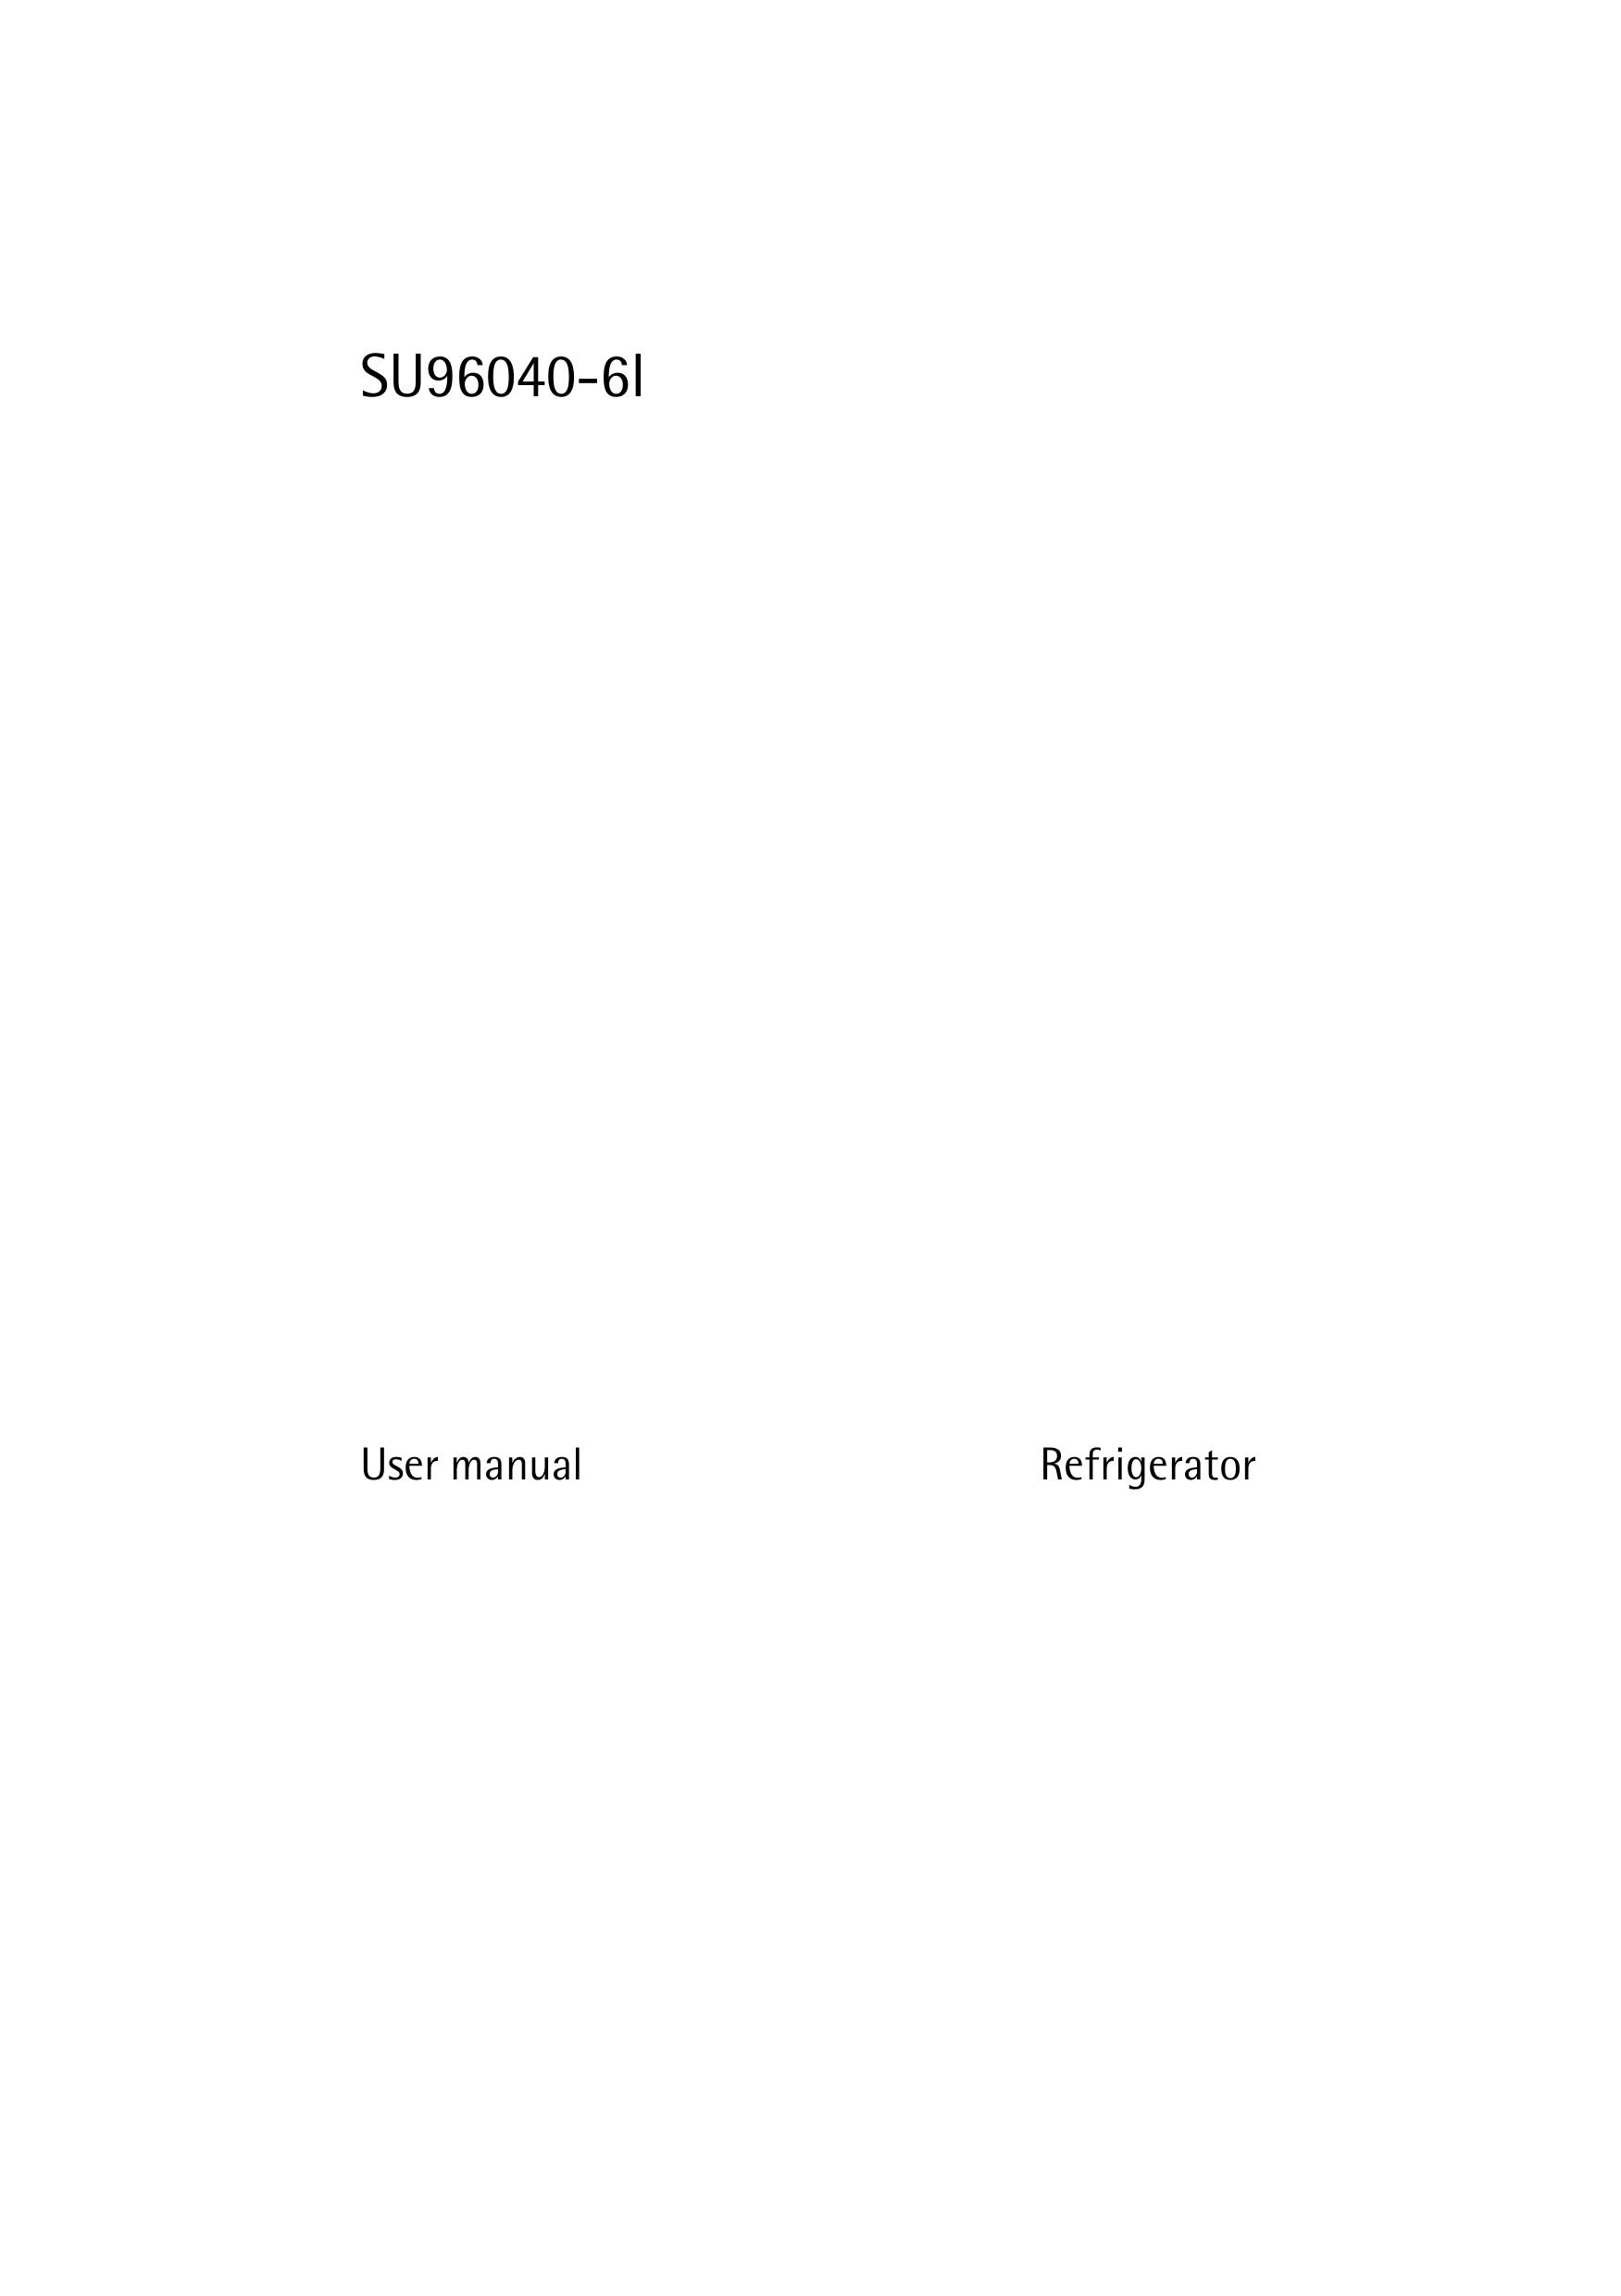 AEG SU96040-6I Refrigerator User Manual